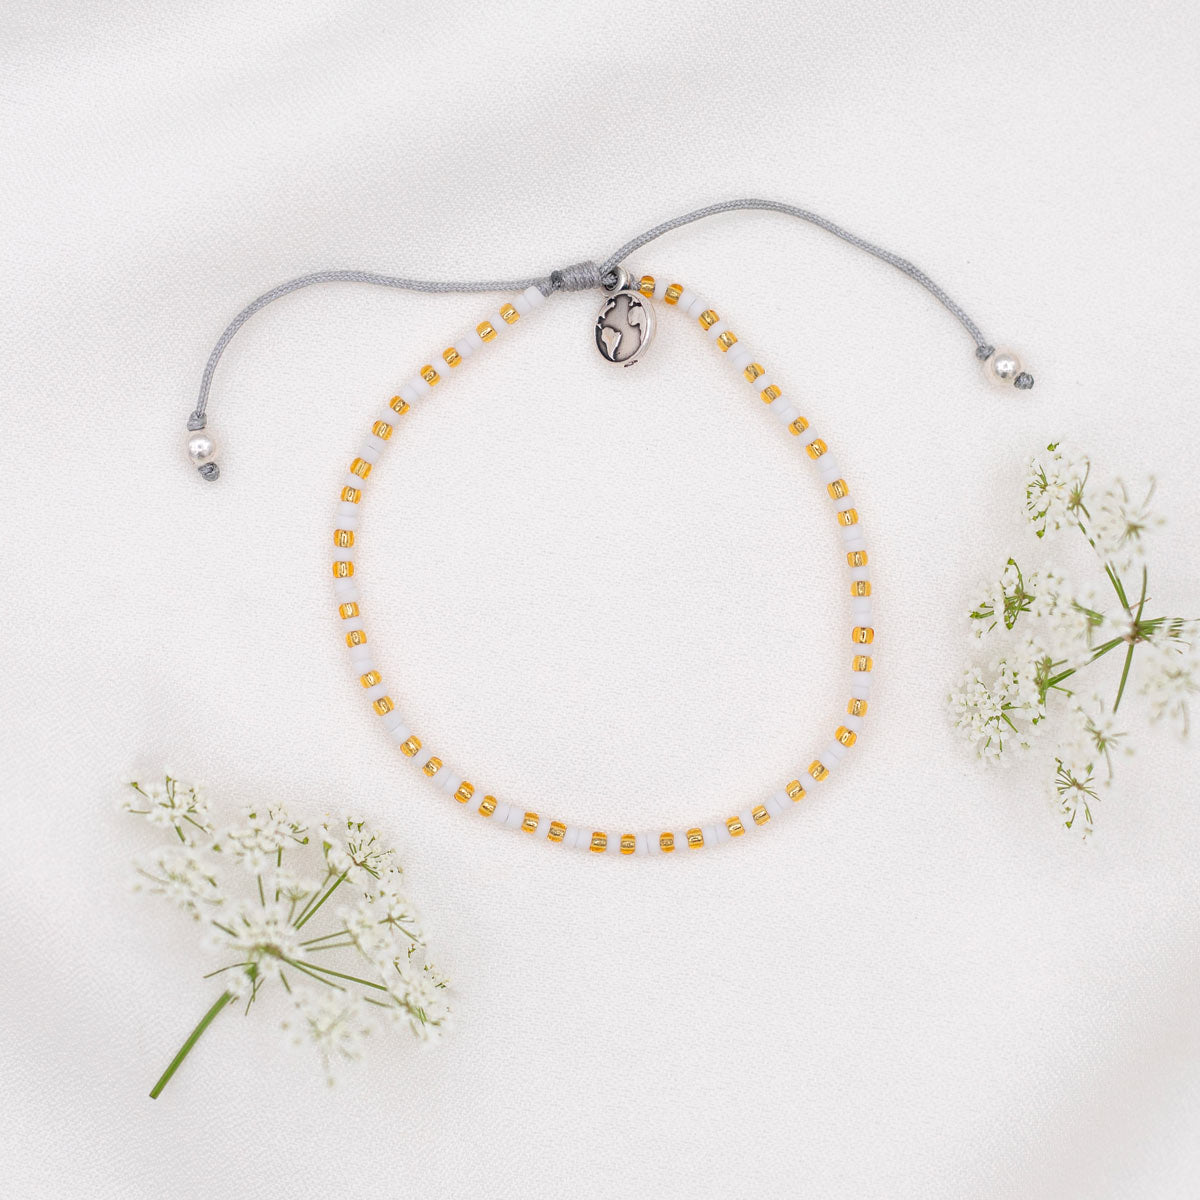 Morse Code Bracelet – Custom Bracelet – BFF Morse Code Jewelry Custom  Bracelet – Morse Code Jewelry – Mother's Day Jewelry – Just Bead It